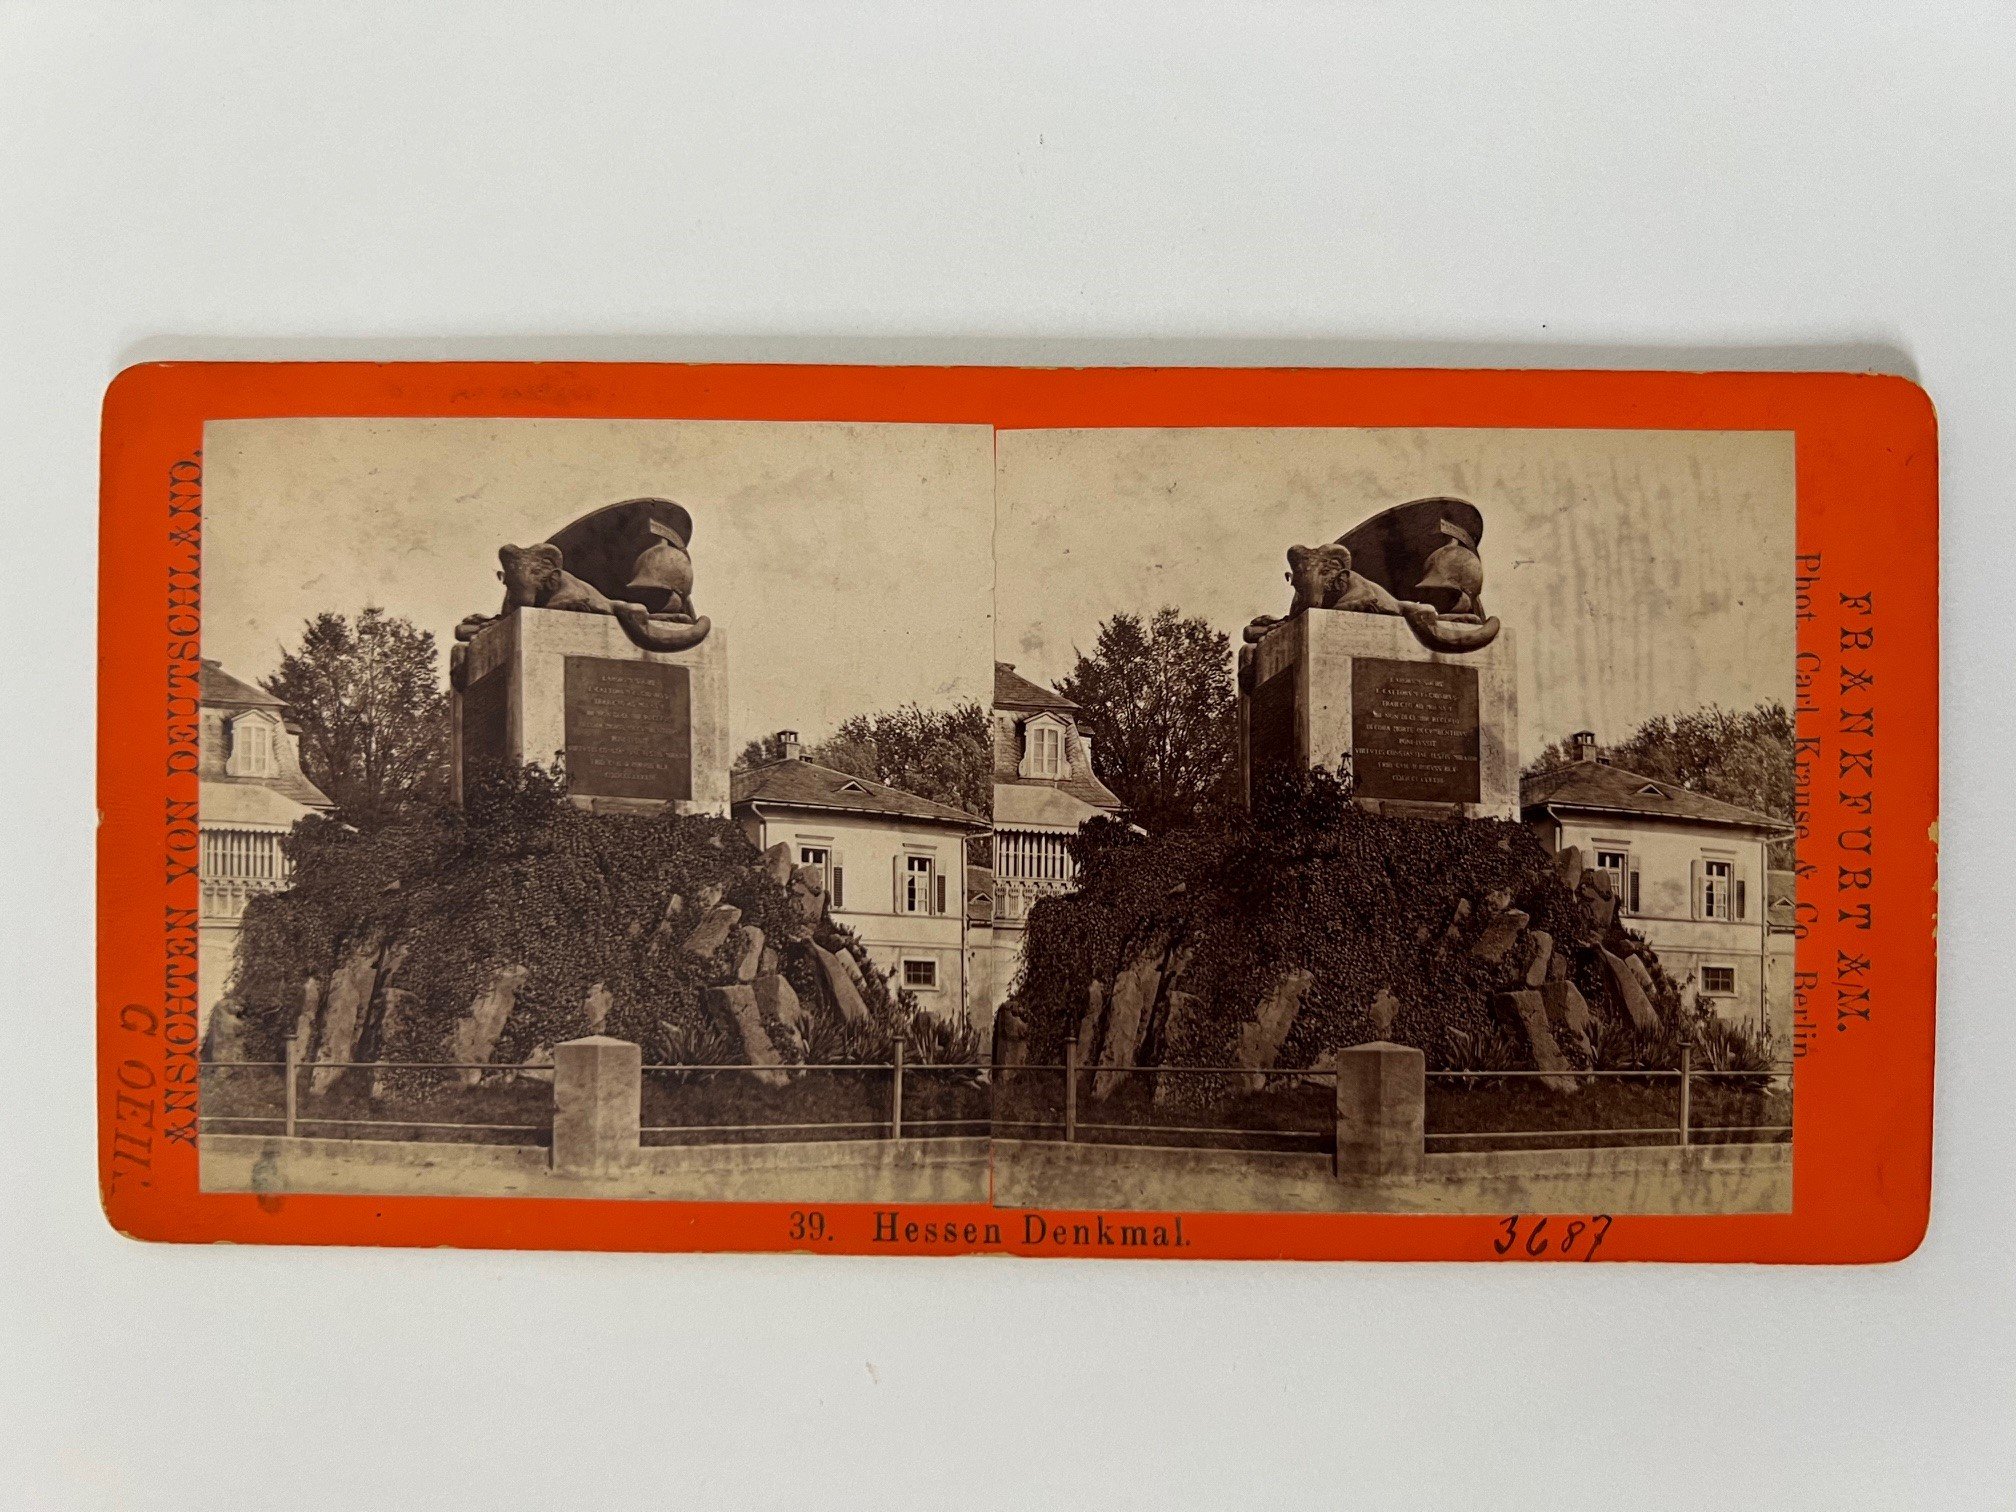 Stereobild, Carl Krause, Frankfurt, Nr. 39, Hessen-Denkmal, ca. 1880. (Taunus-Rhein-Main - Regionalgeschichtliche Sammlung Dr. Stefan Naas CC BY-NC-SA)